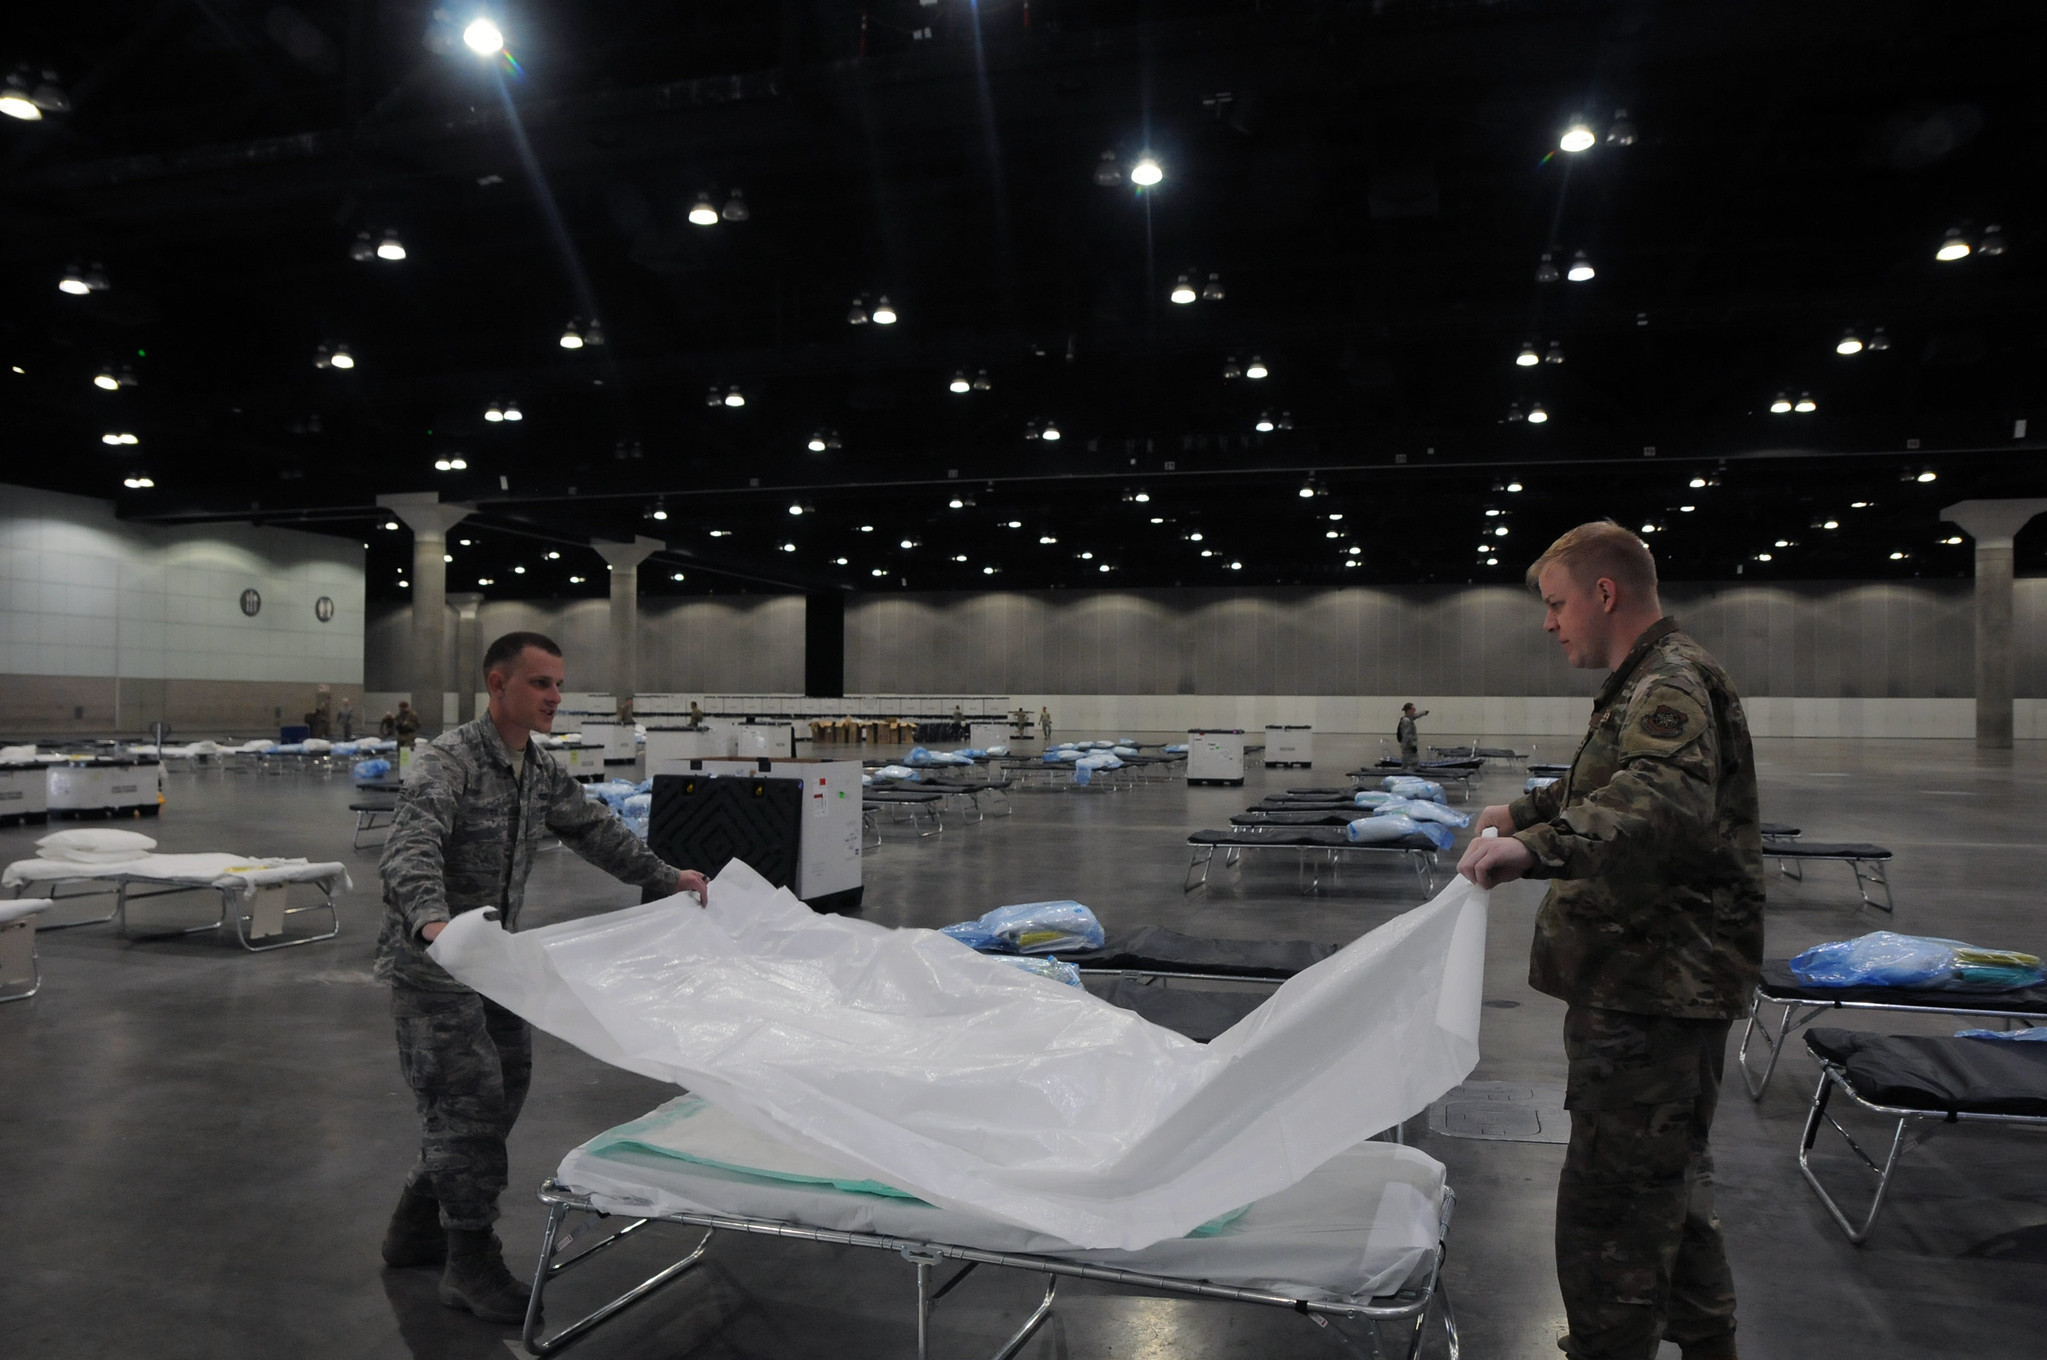 national guard members prepare a hospital bed